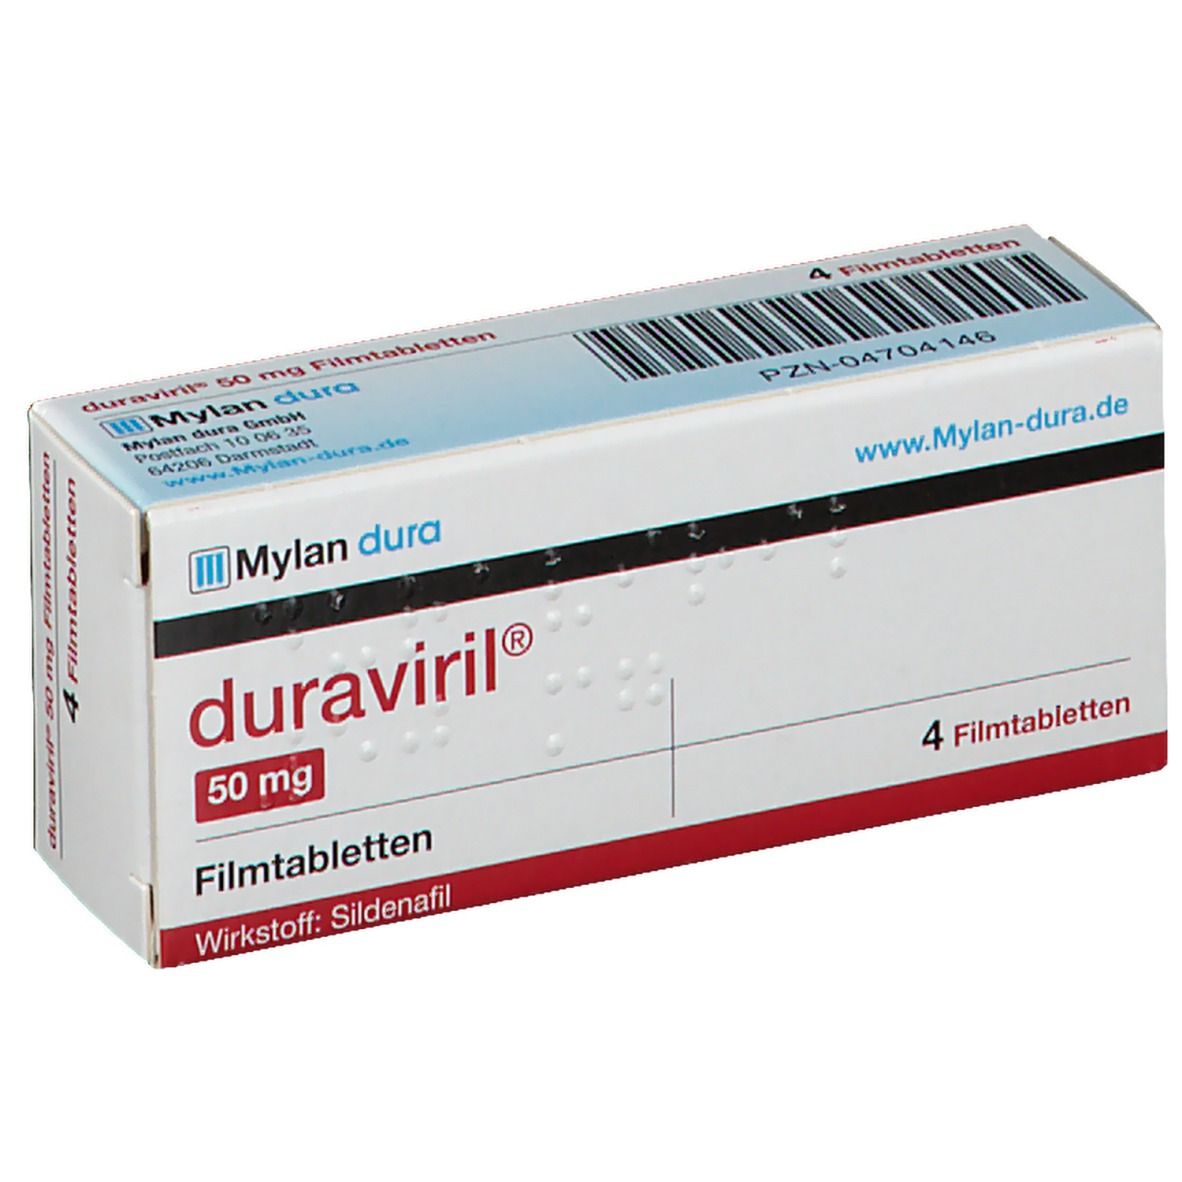 duraviril® 50 mg